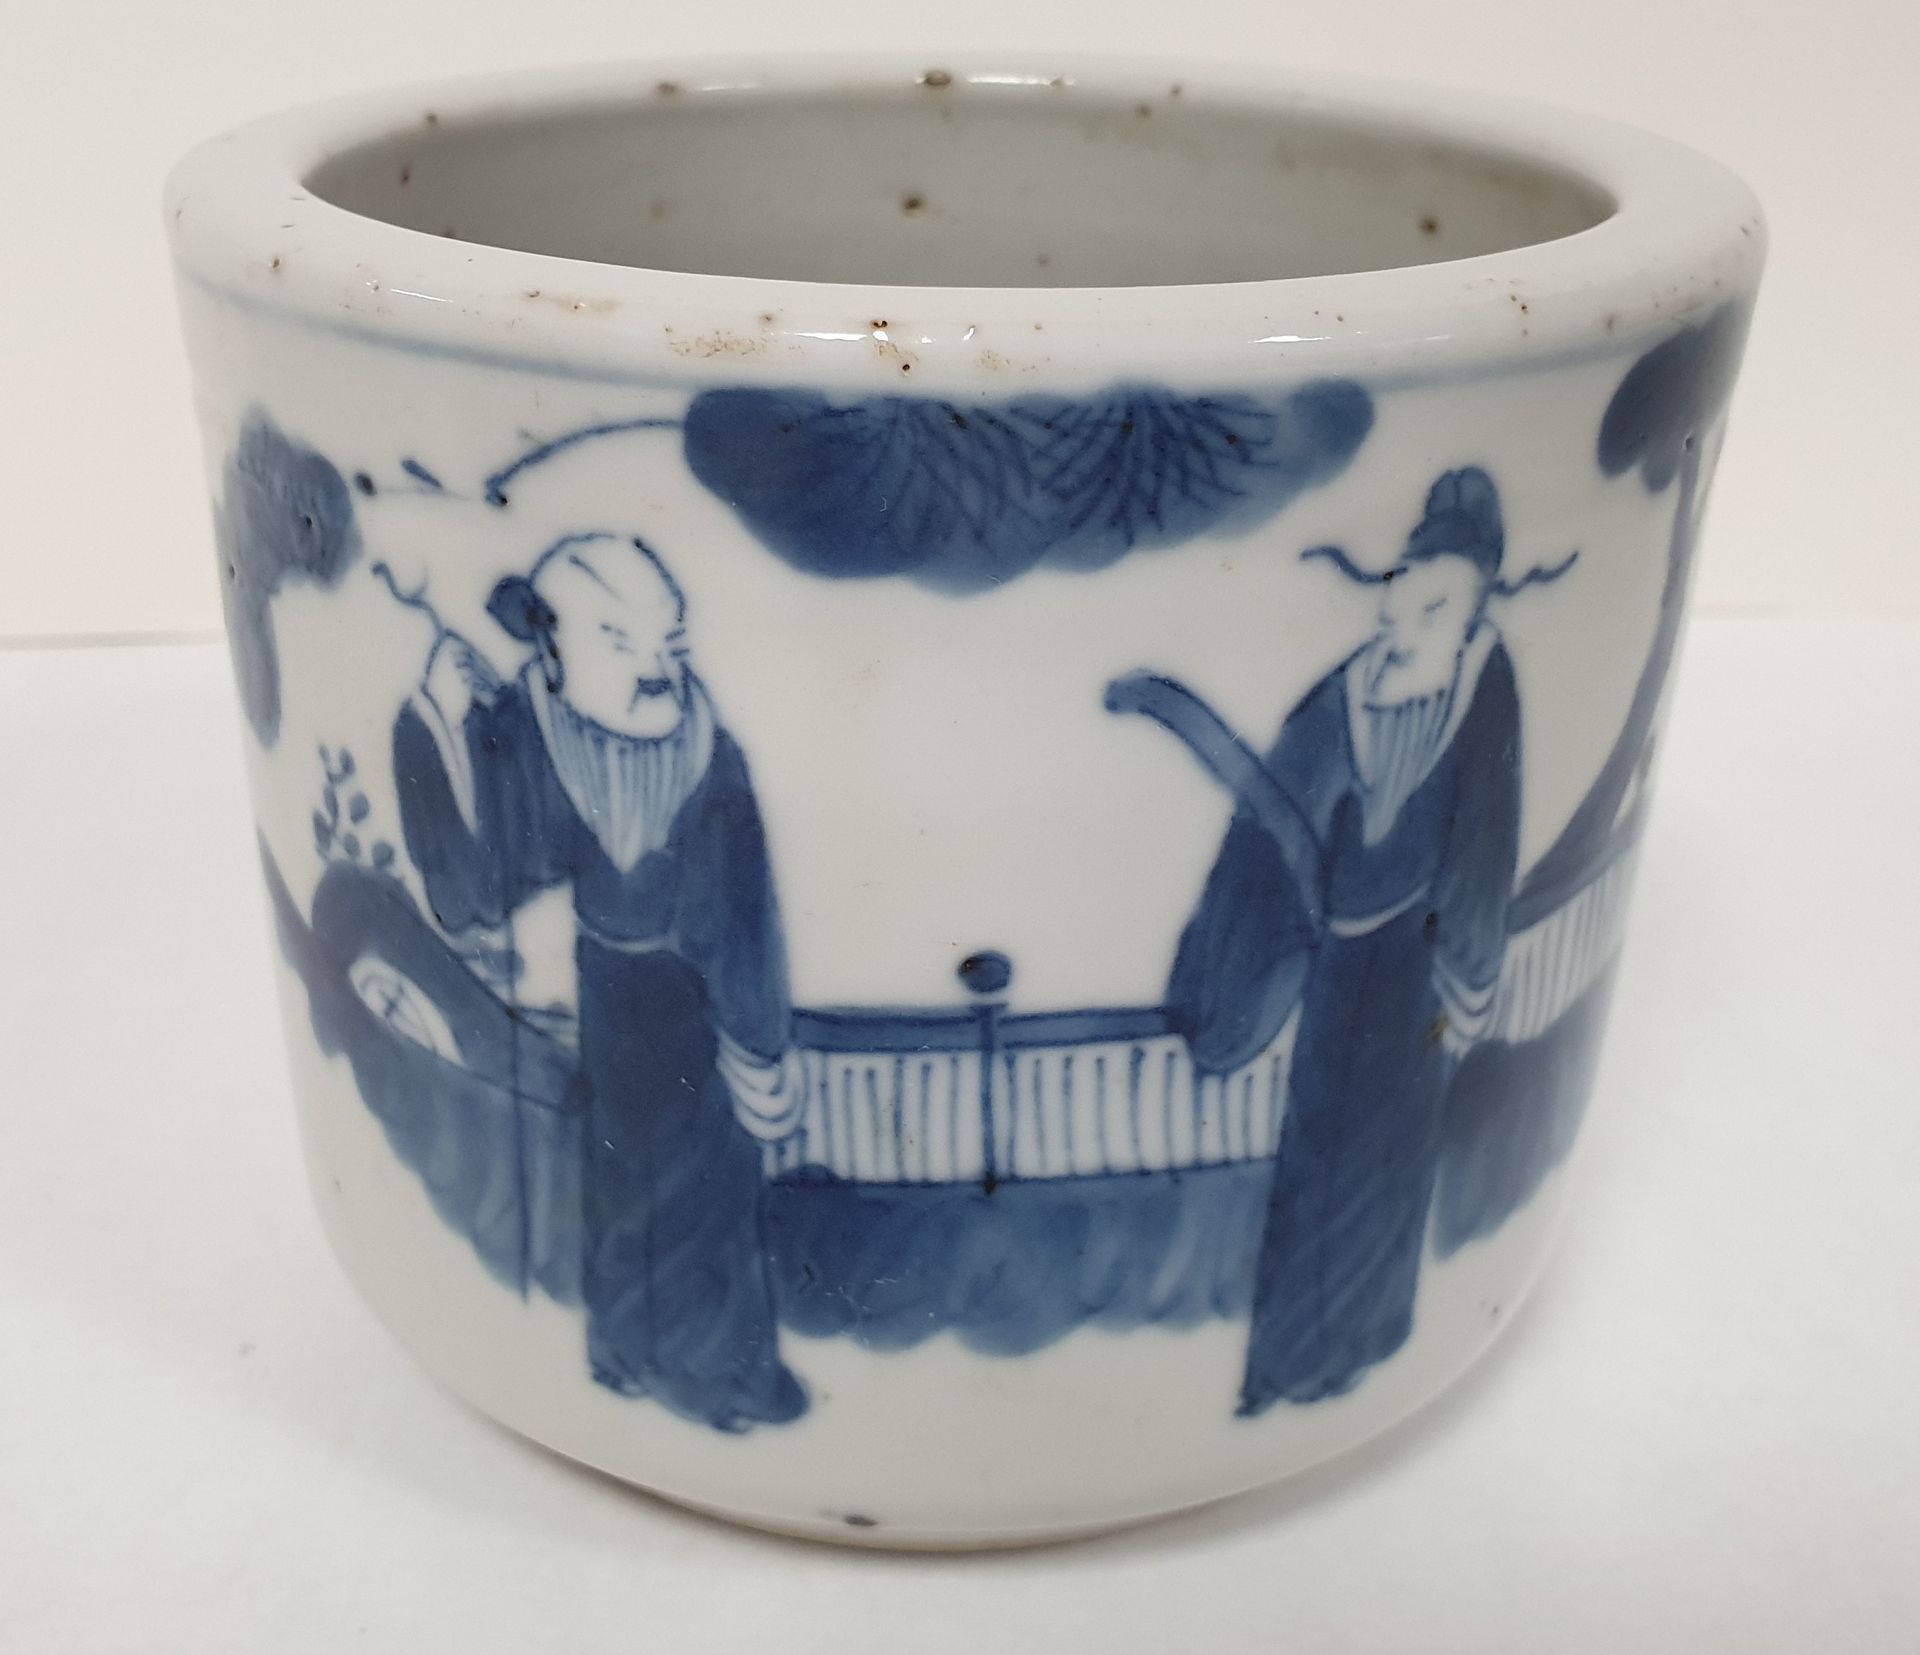 Null Pequeño portacepillos, China, siglo XIX. 
Forma cilíndrica de porcelana con&hellip;